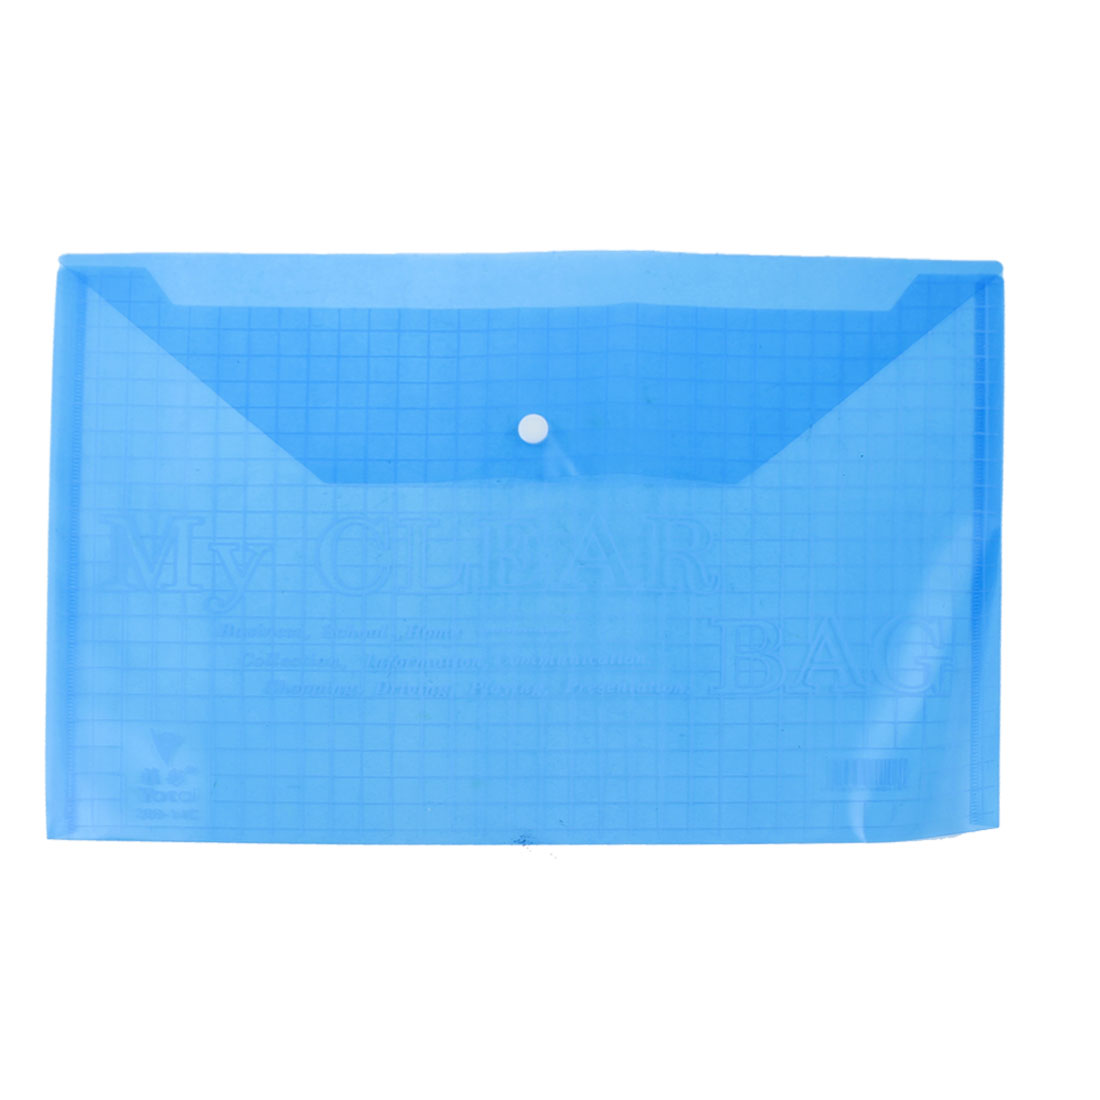 Unique Bargains Student Water Proof A4 Paper Document File Bag Case Holder Organizer Blue Clear